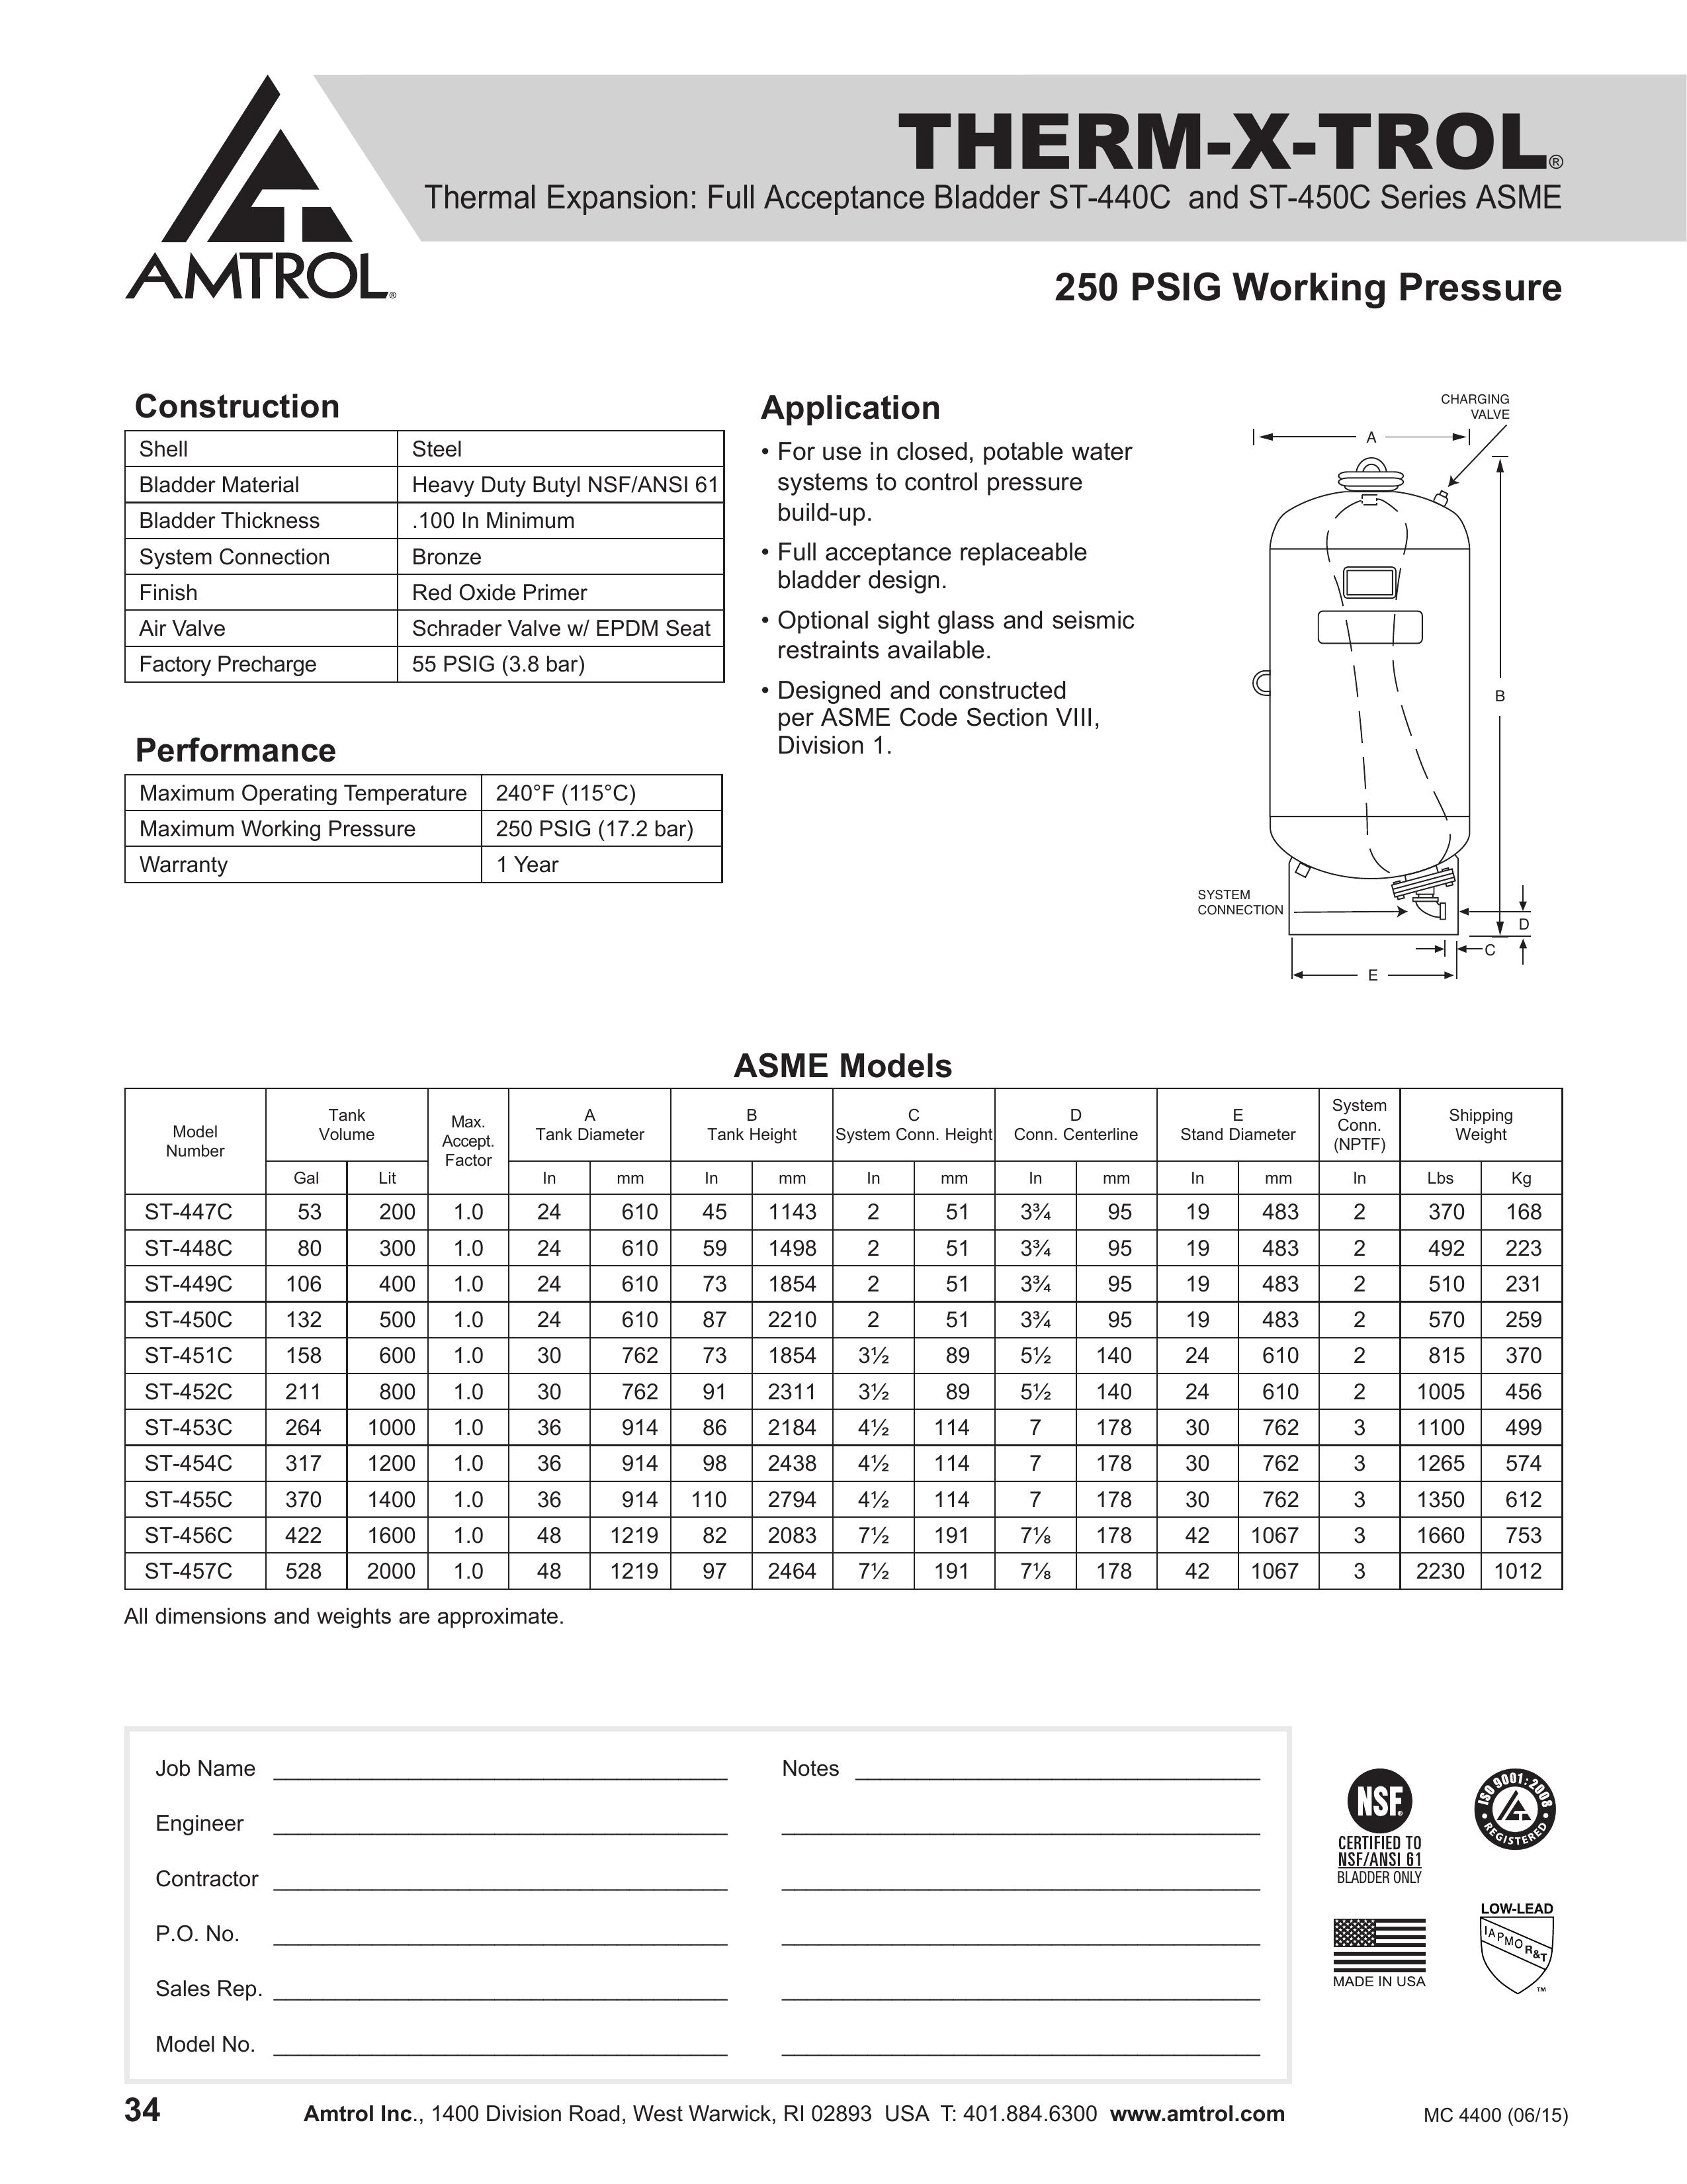 Amtrol ST-448C Slow Cooker User Manual